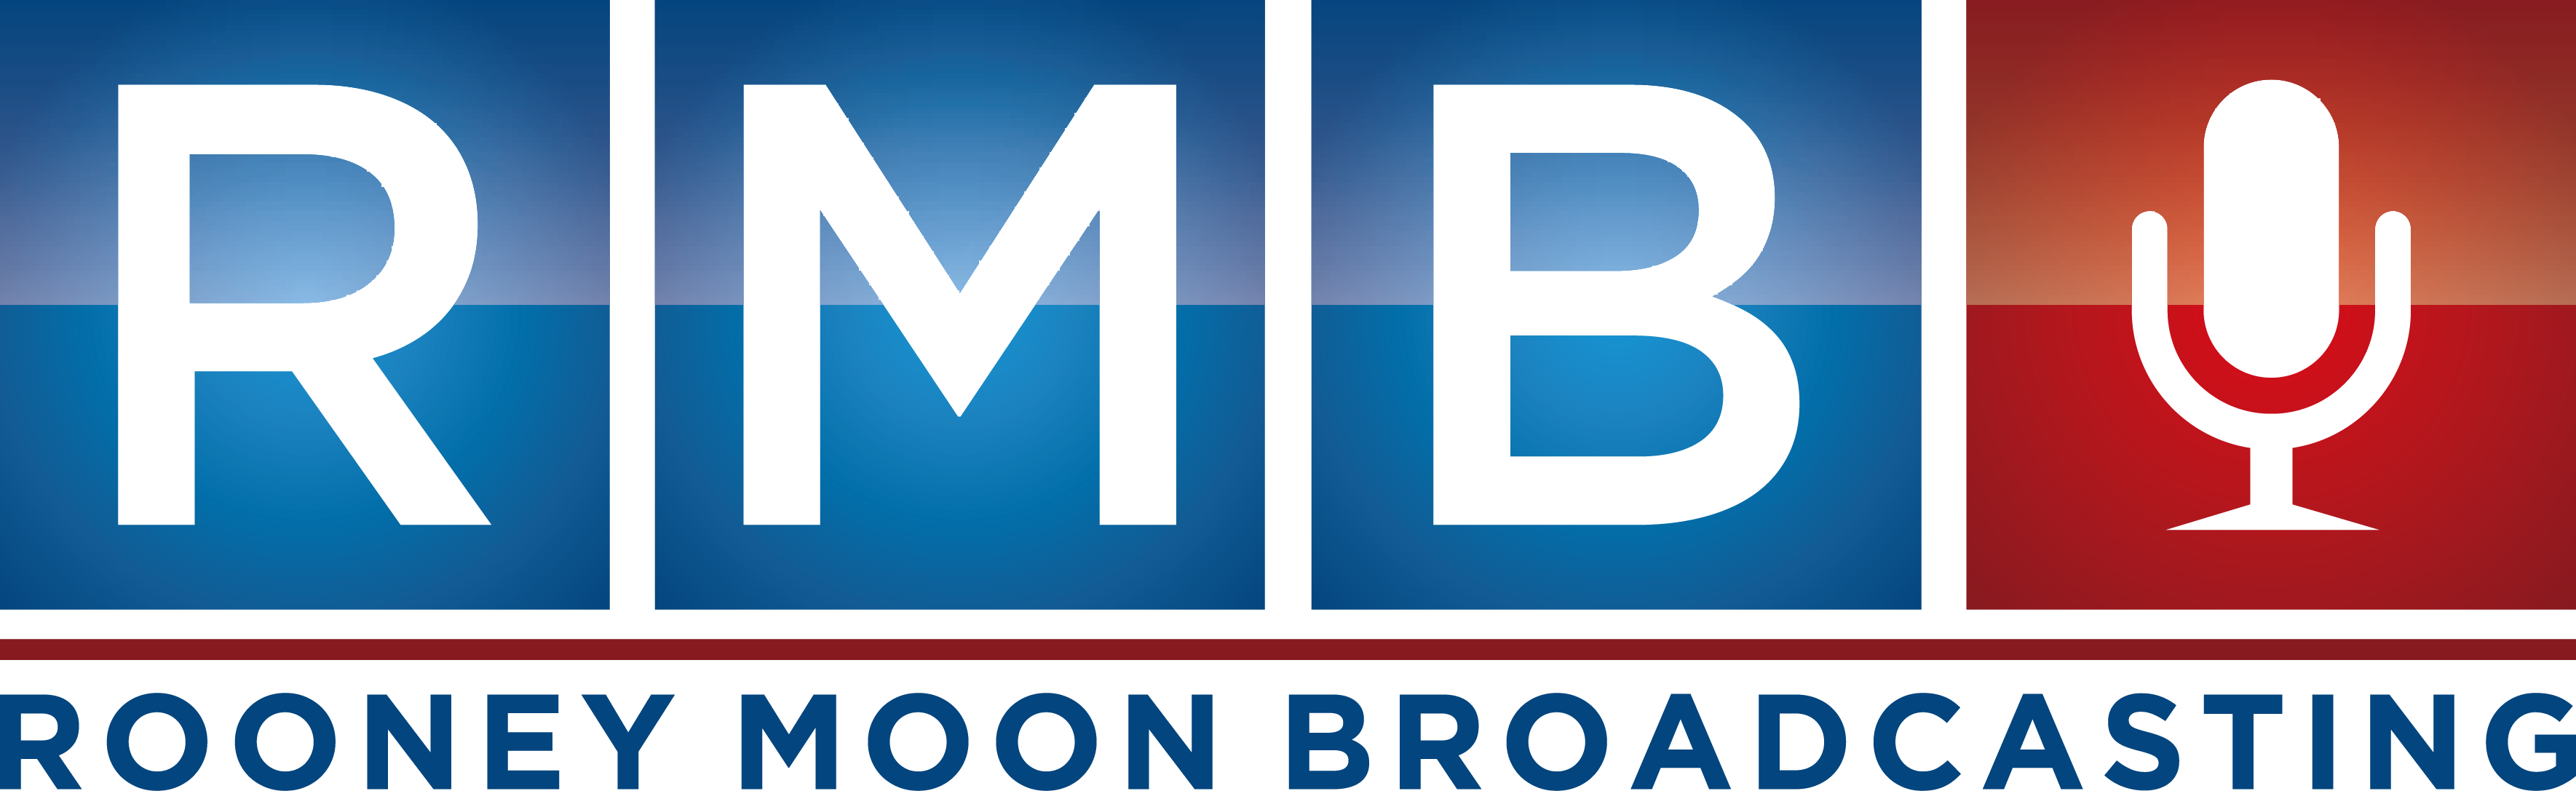 rooney moon broadcasting corporate logo